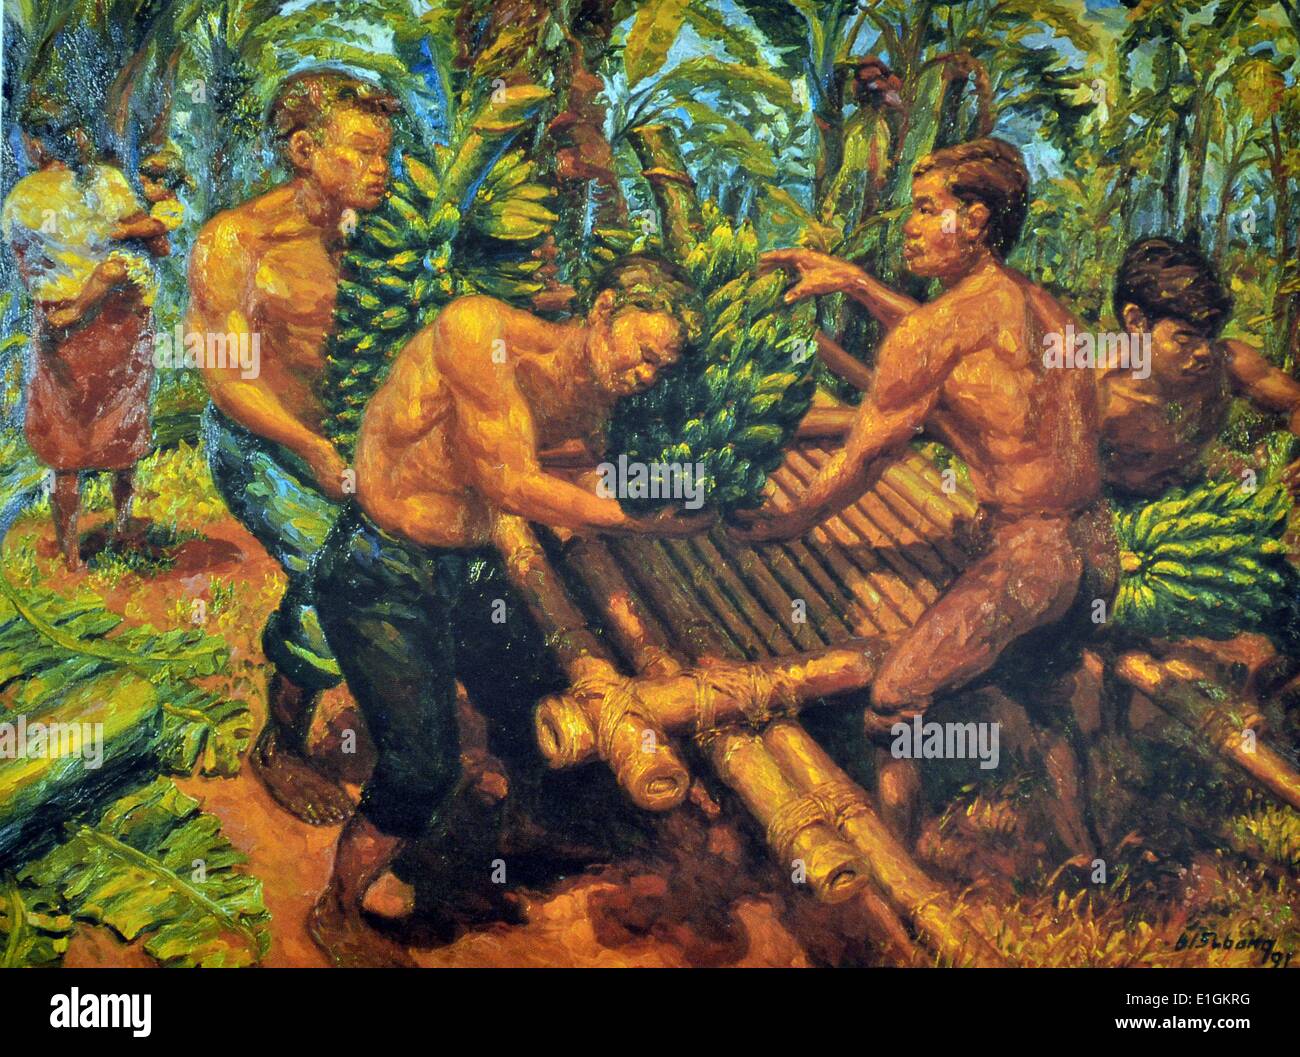 Gamaliel Subang, Banana Plantation Workers, 1991. Oil on canvas. Stock Photo